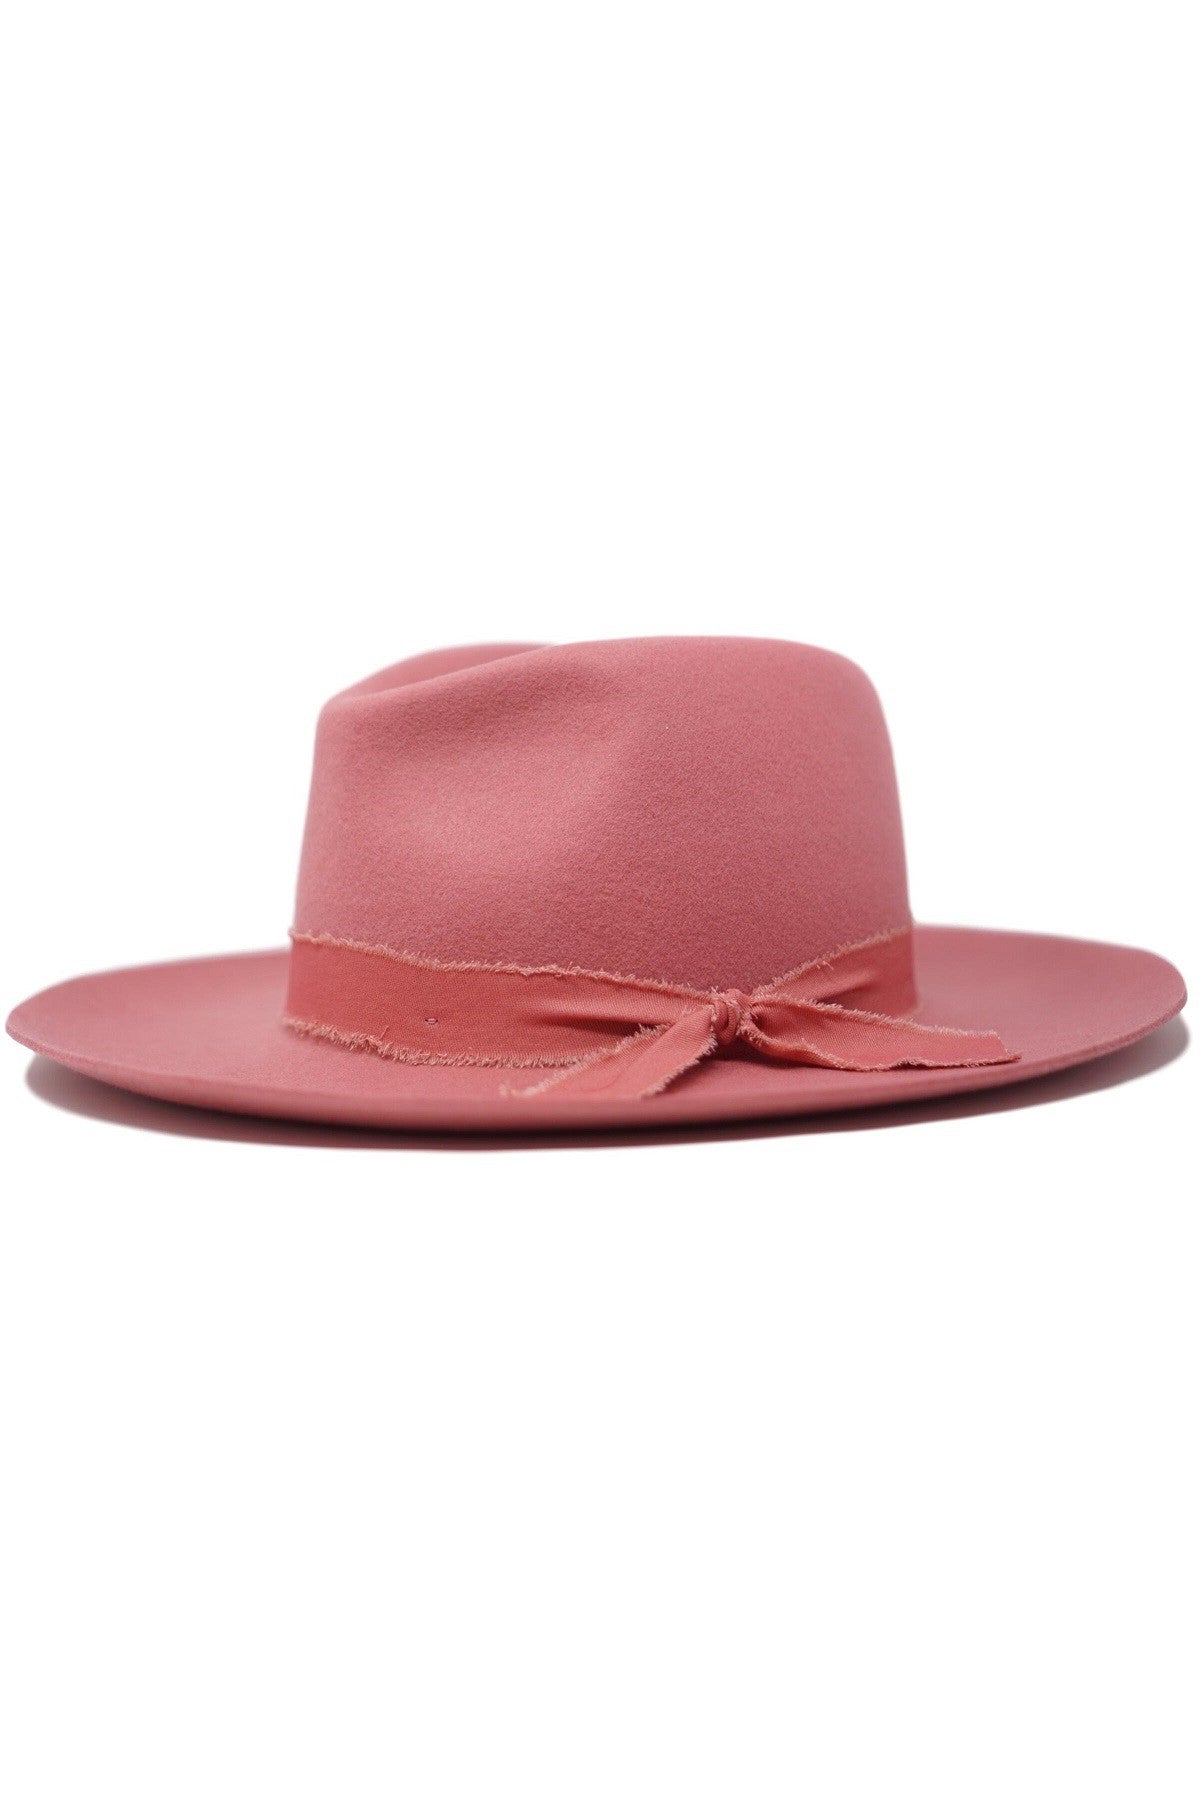 Olive & Pique Wool Felt Panama Hat - Blush